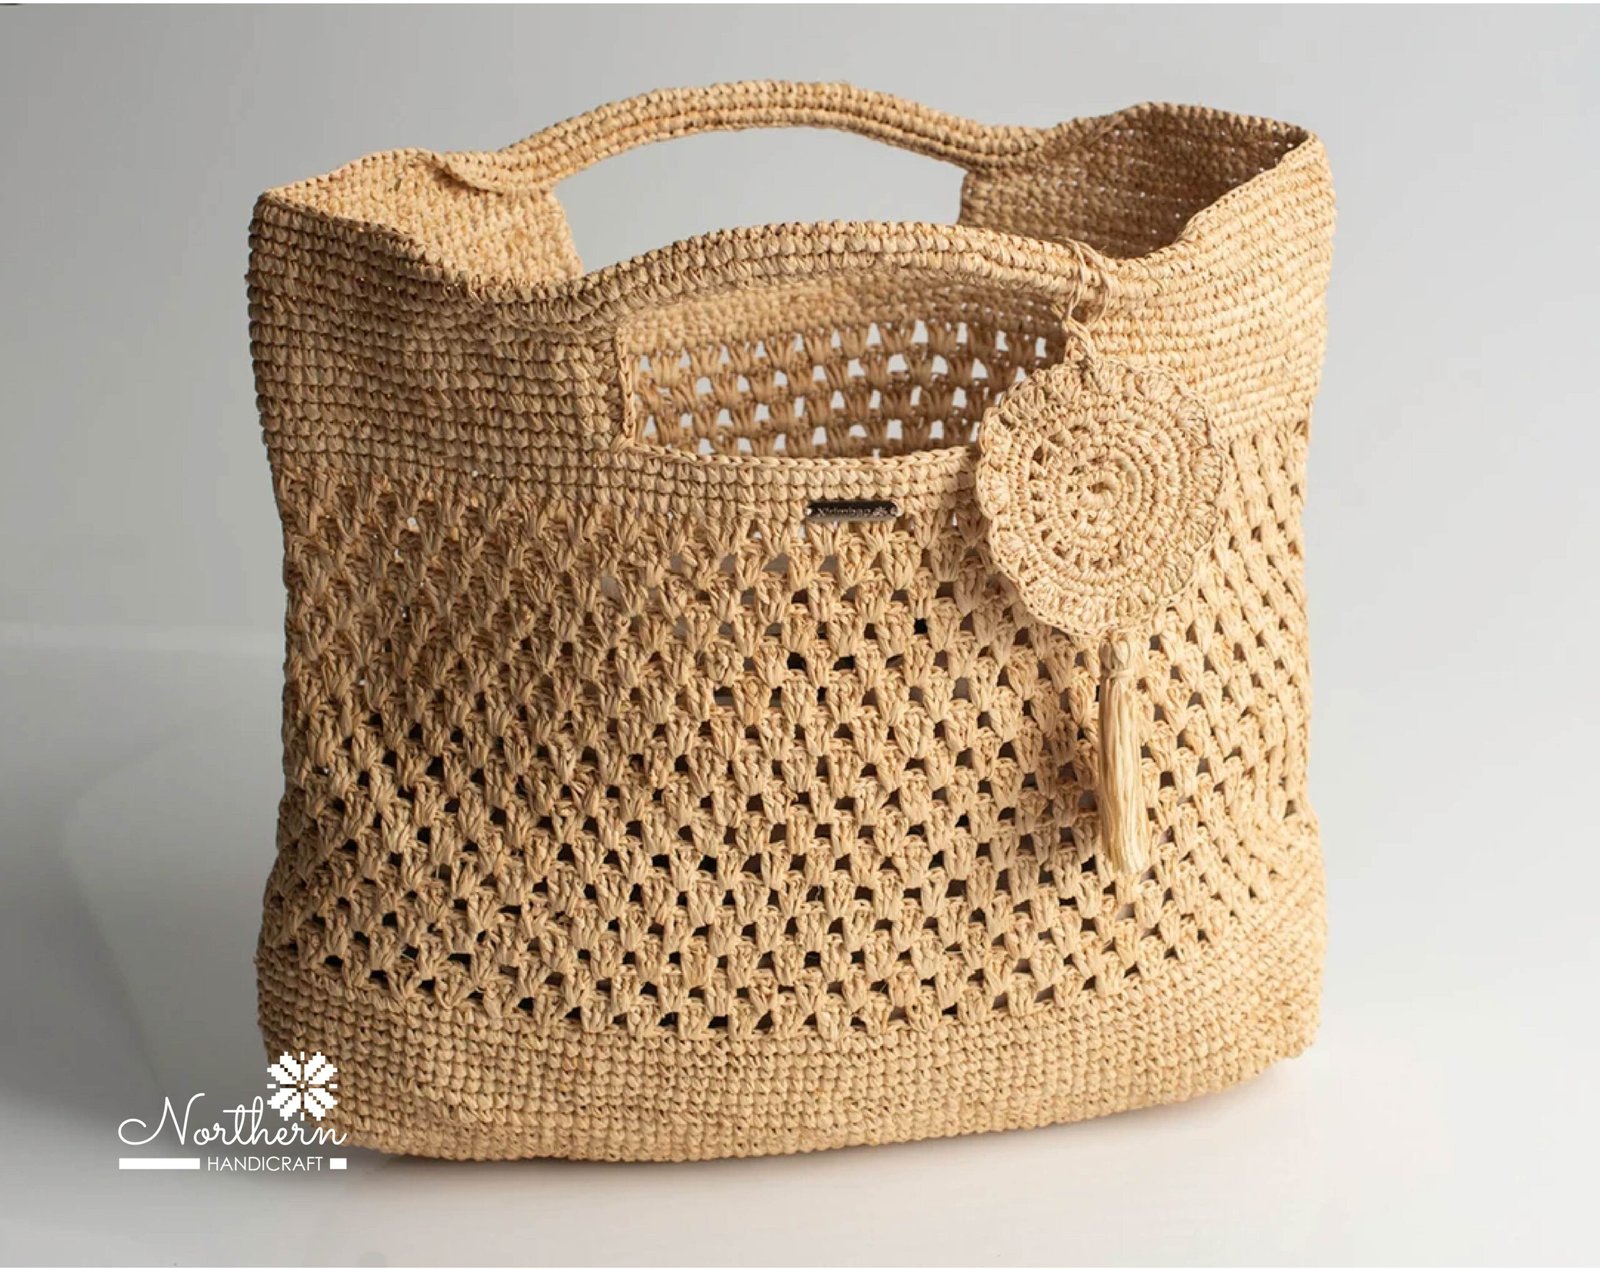 Jute Handbag – Northern Handicraft